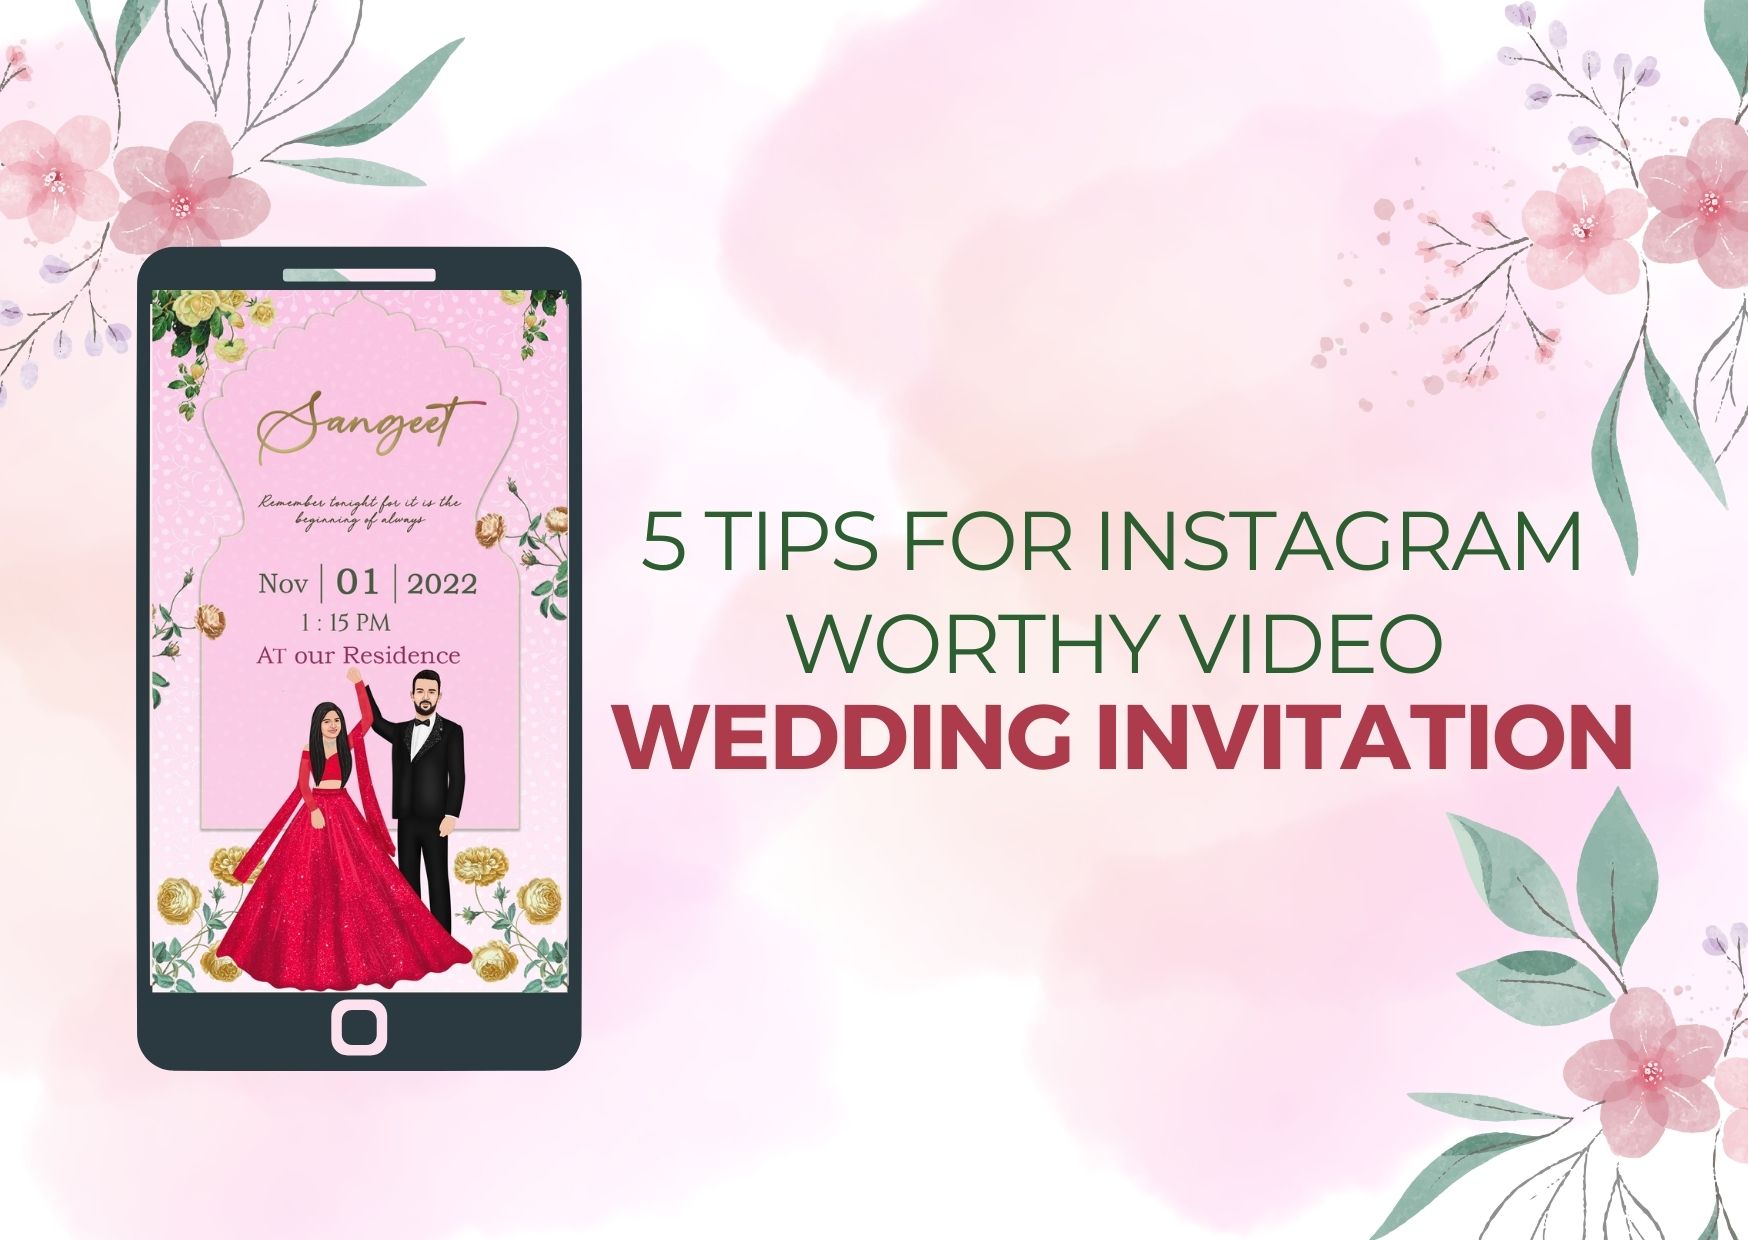 5 tips for Instagram-worthy video wedding invitation